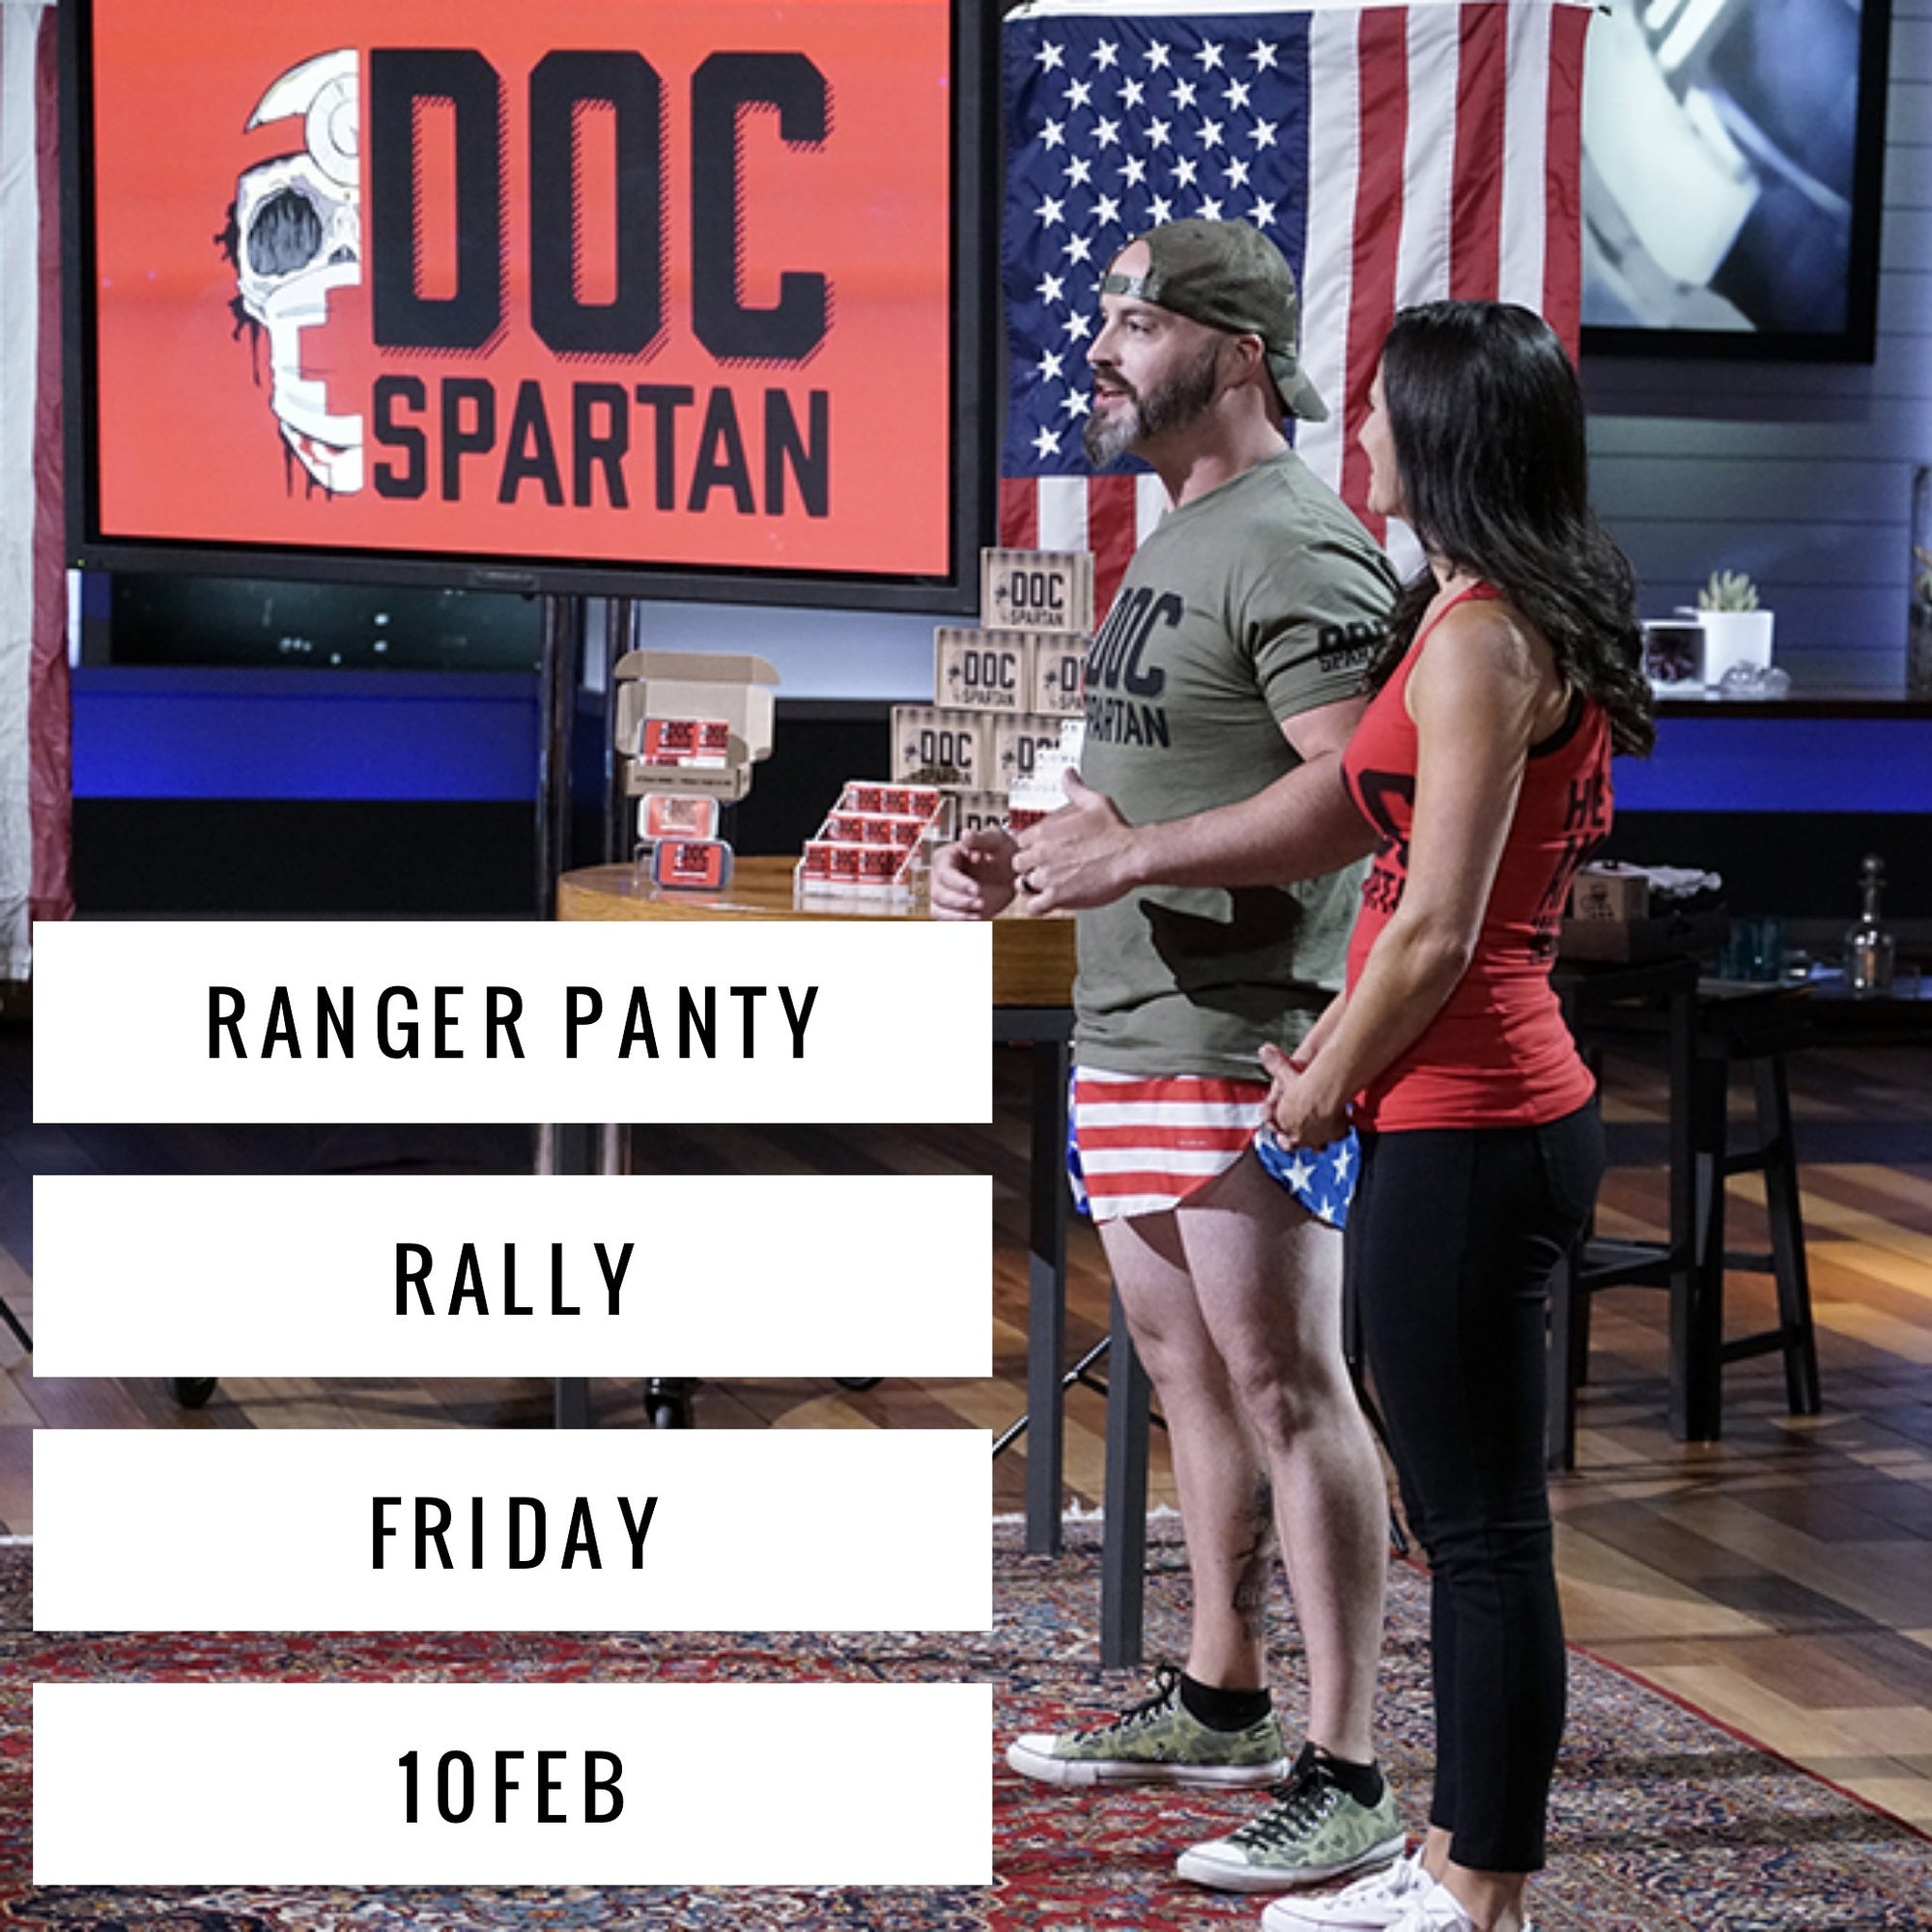 Ranger Panty Rally 10FEB!